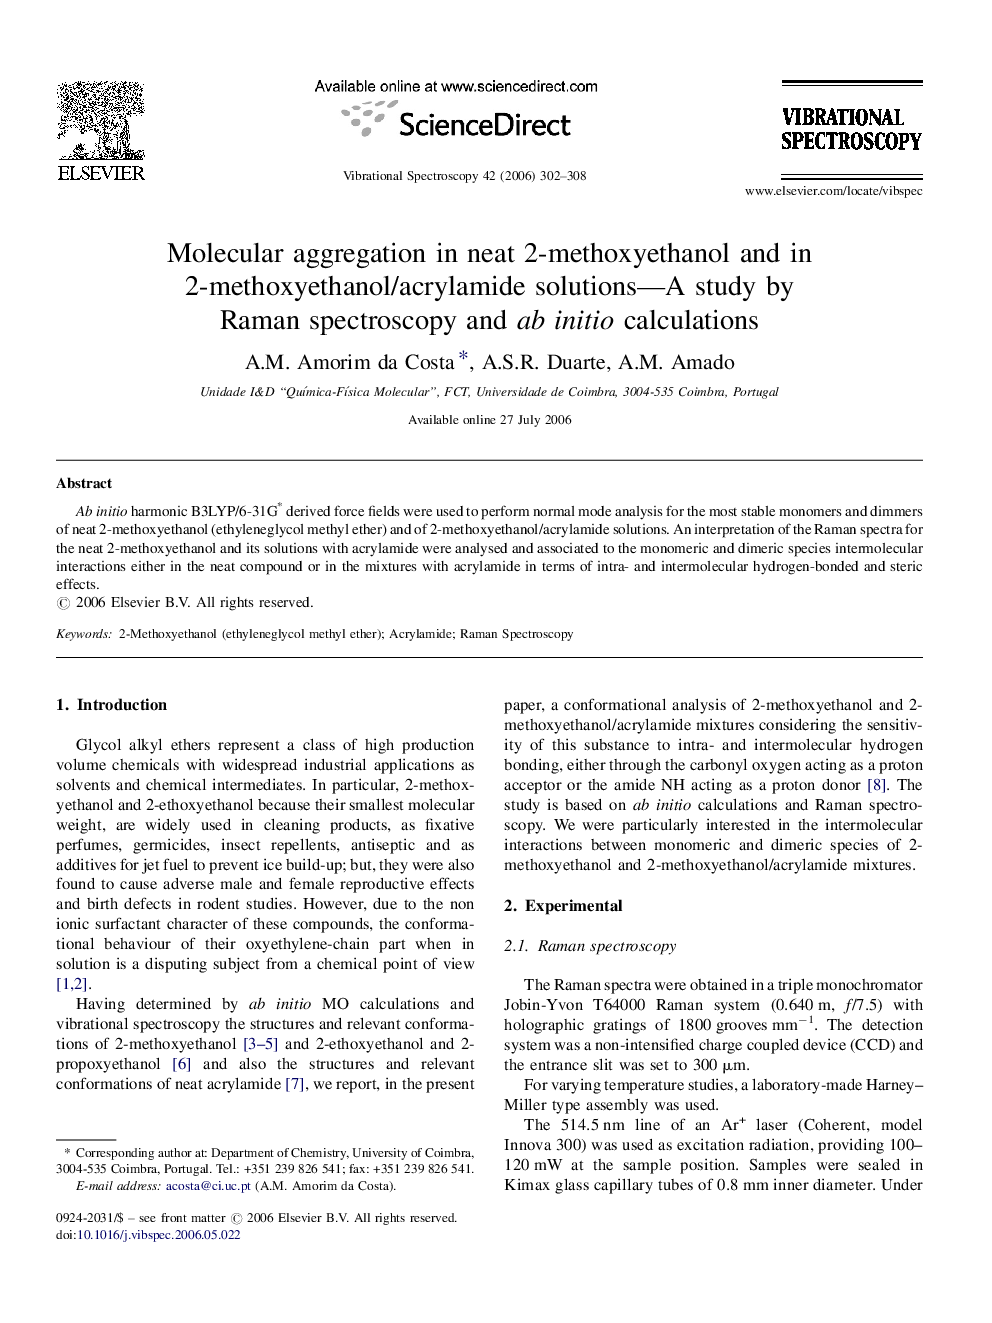 Molecular aggregation in neat 2-methoxyethanol and in 2-methoxyethanol/acrylamide solutions-A study by Raman spectroscopy and ab initio calculations